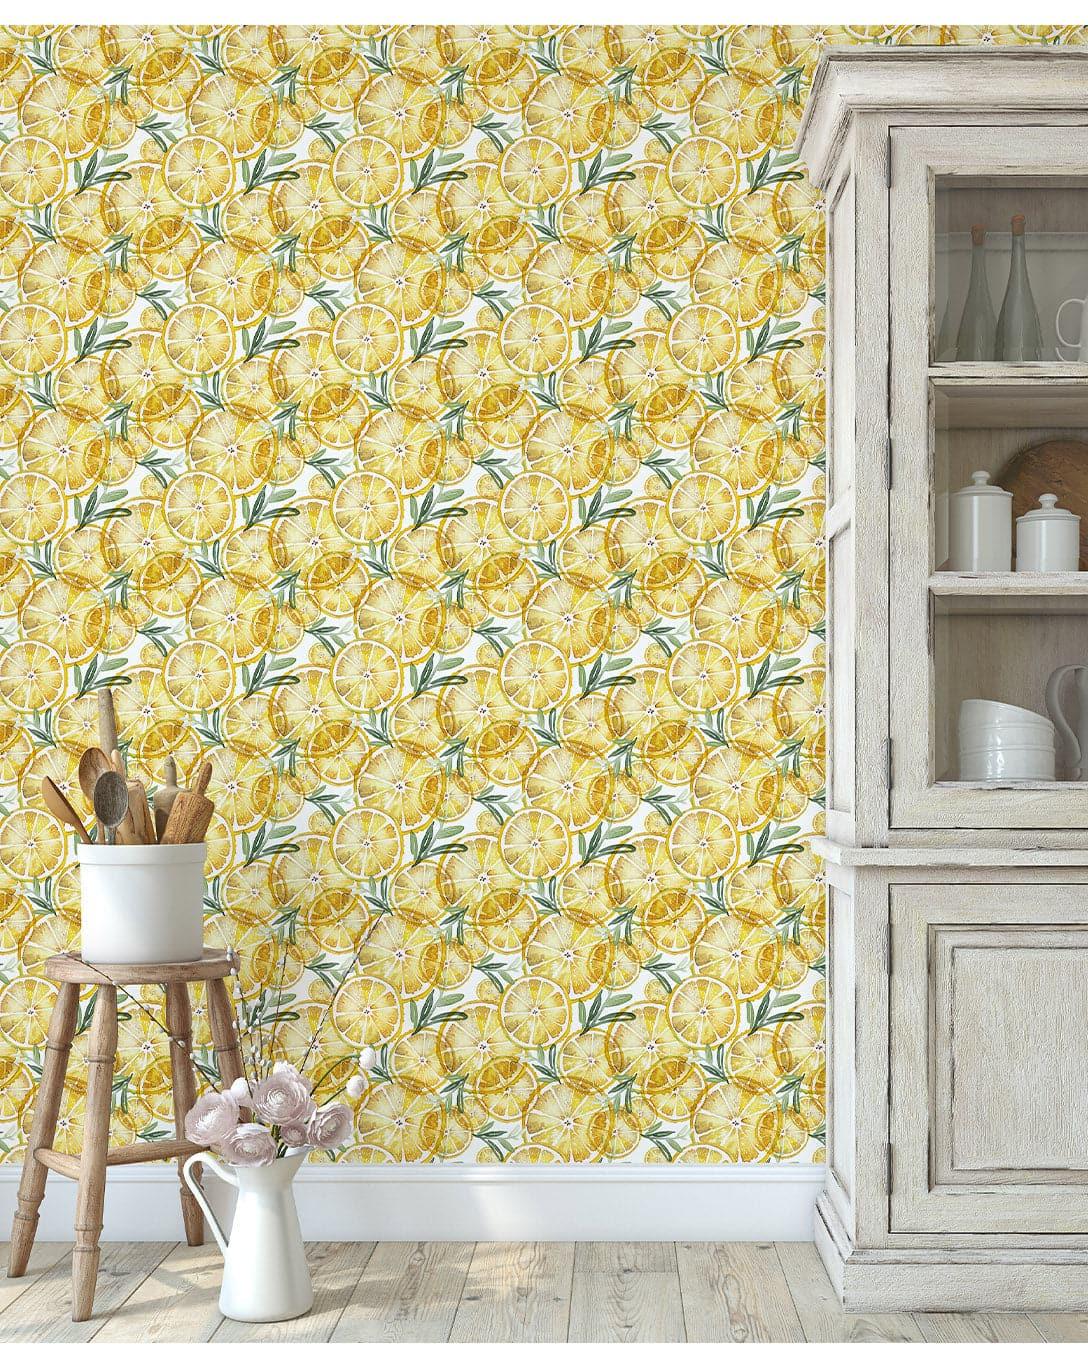 Retro Style Geometric Lines Wallpaper Yellow Lemons Fruit Kitchen Removable Wallpaper 